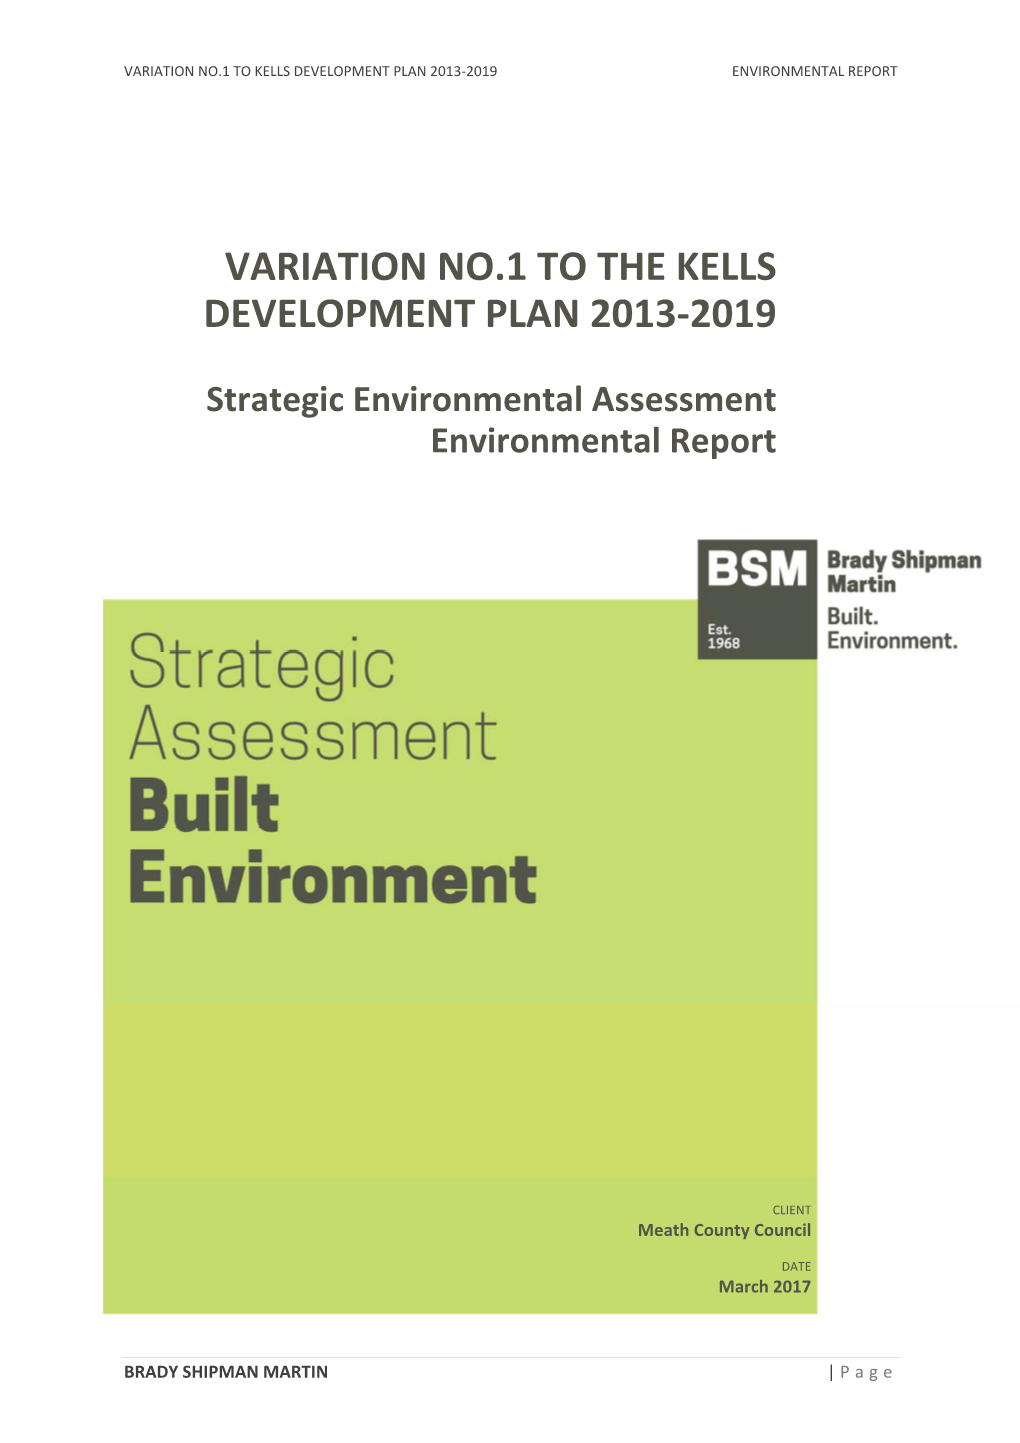 Variation No.1 to the Kells Development Plan 2013-2019